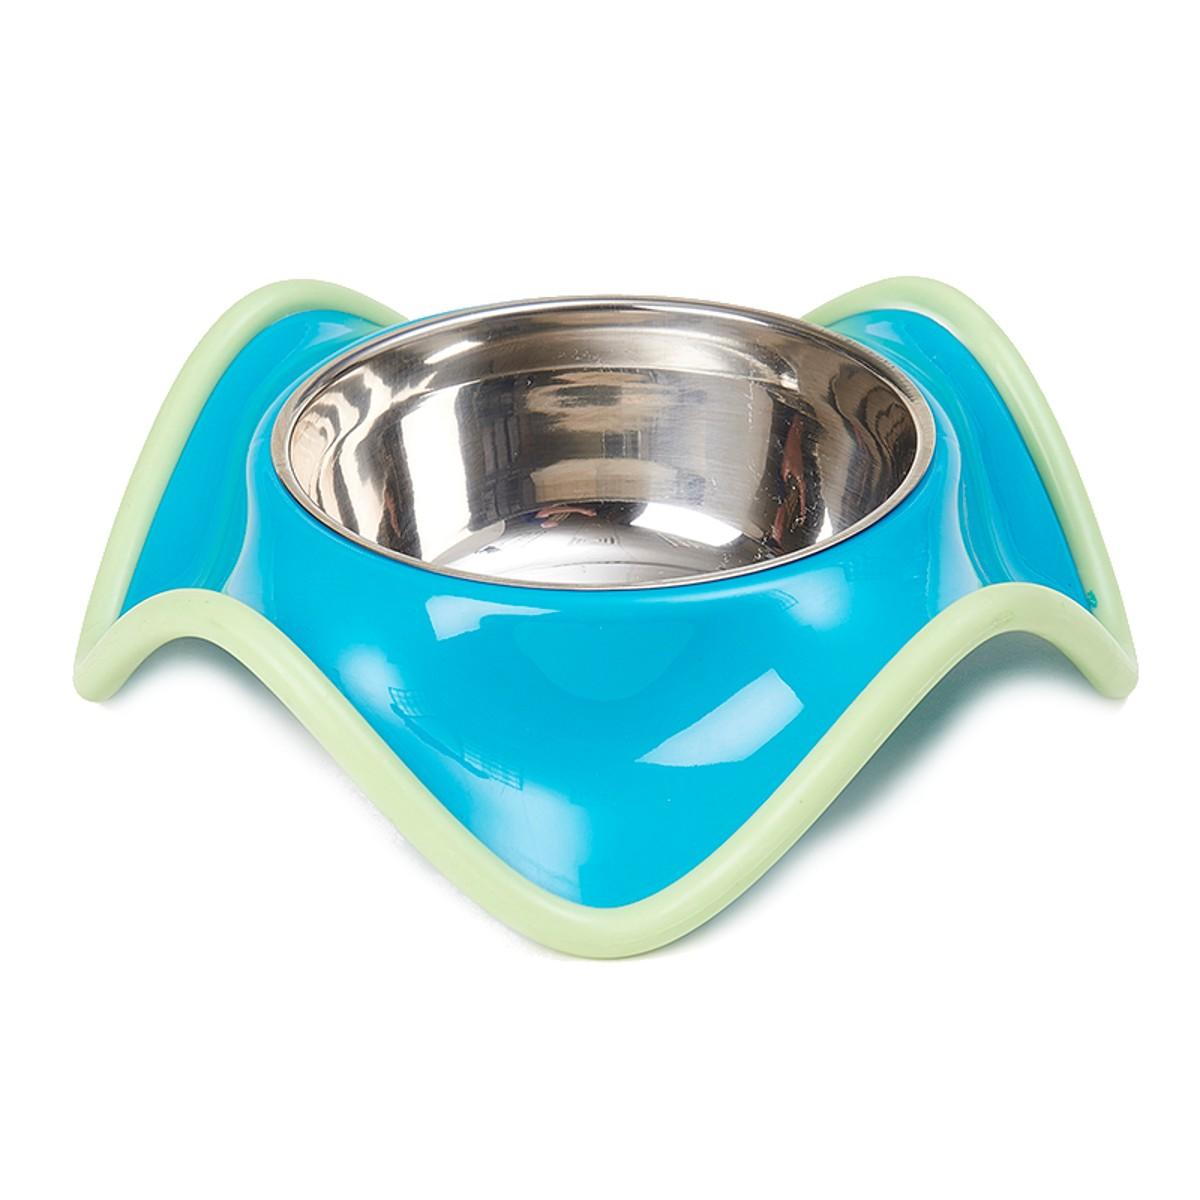 Petrageous Milos Stainless Steel Dog Bowl - Teal